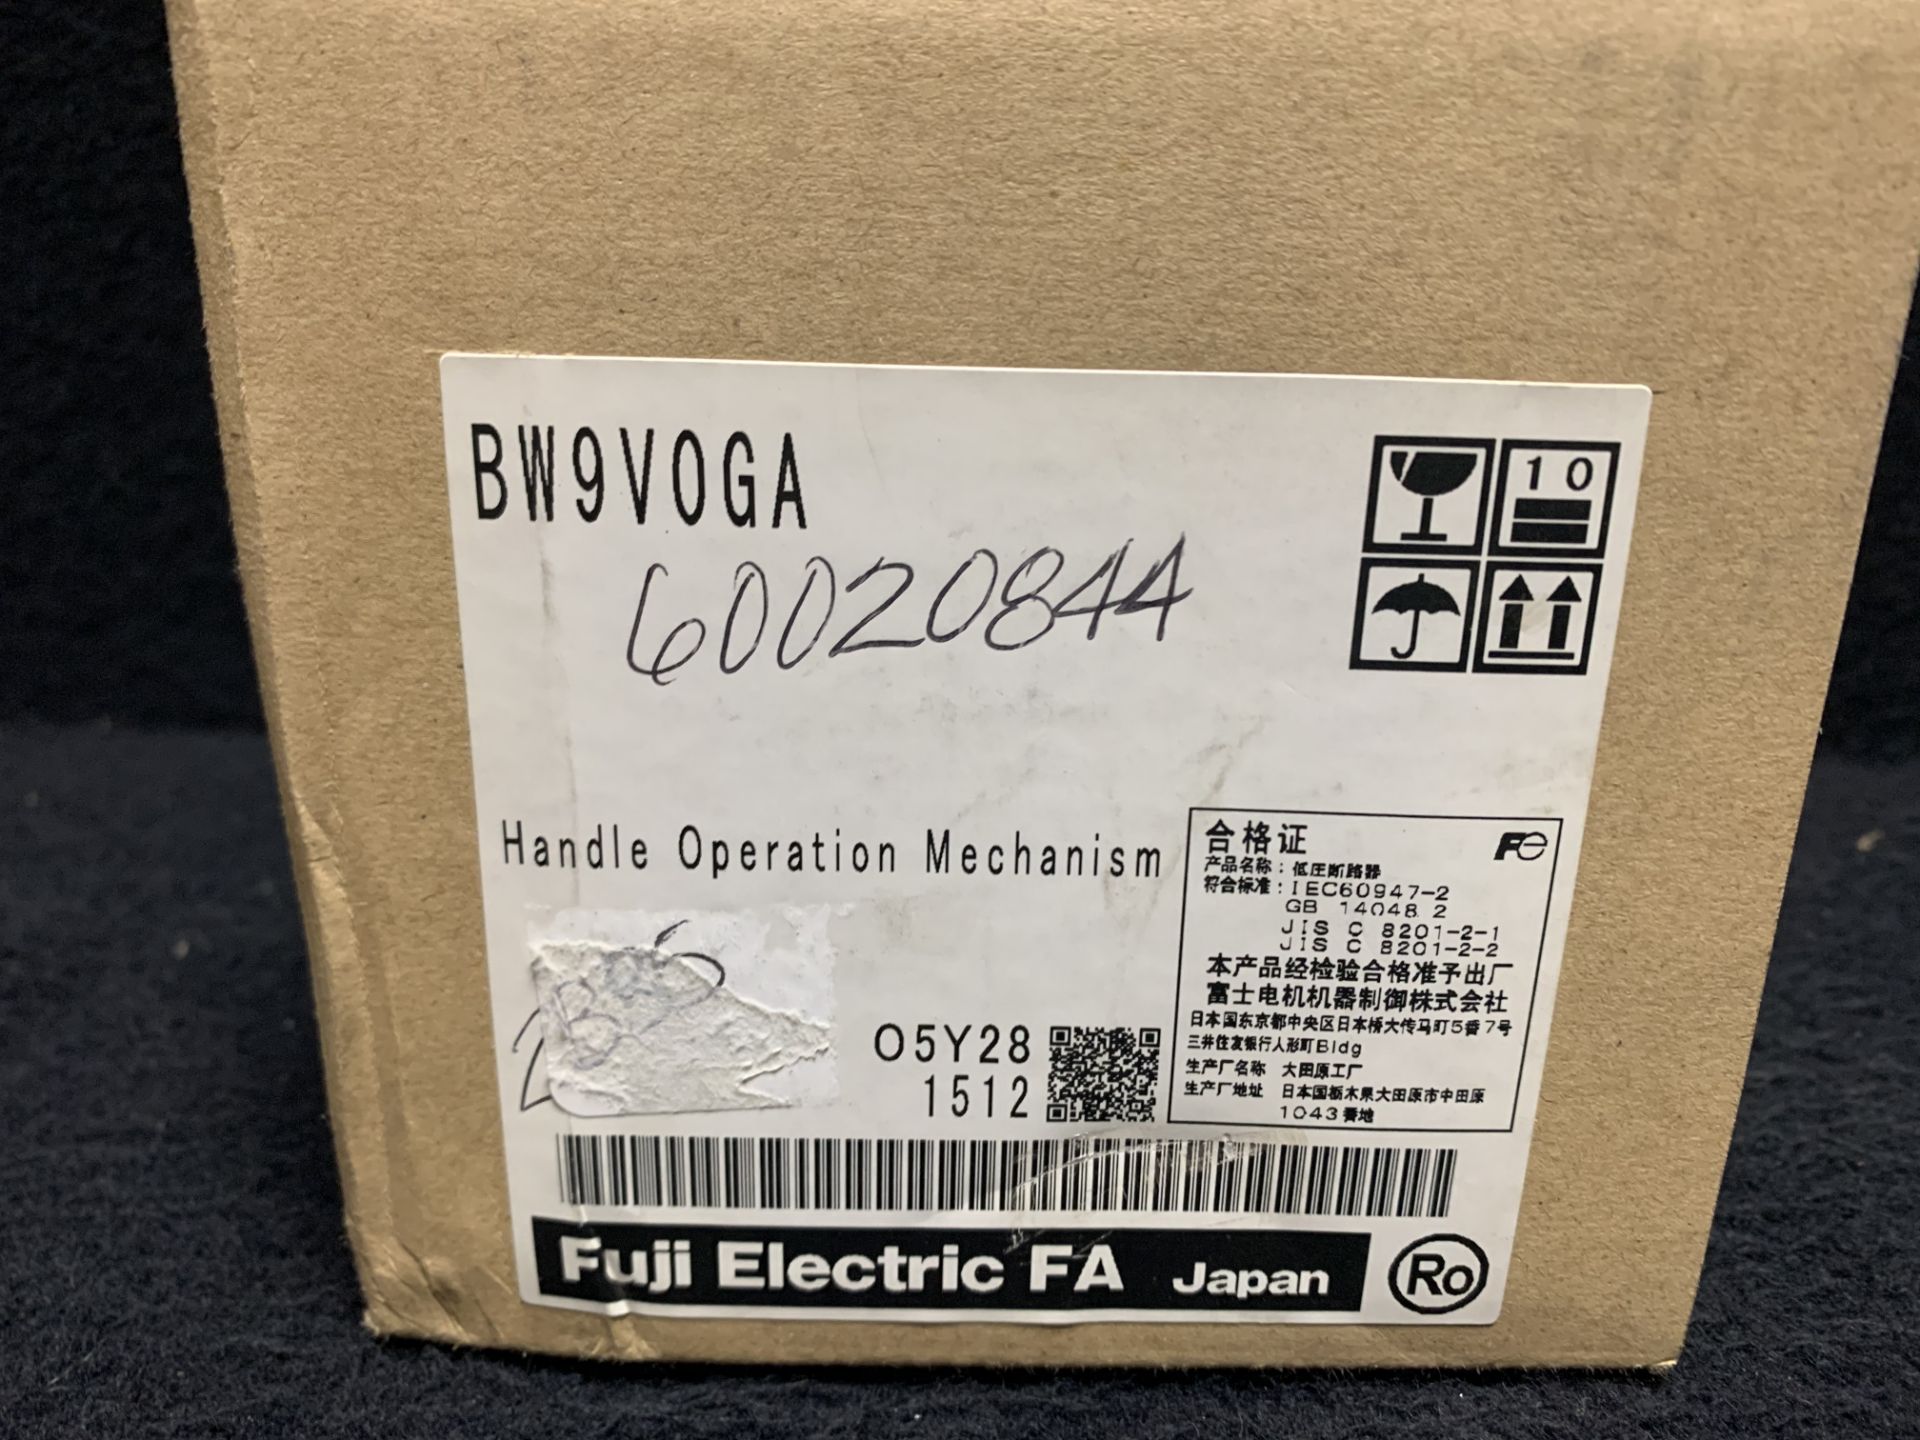 NEW IN BOX - FUJI ELECTRIC BW9V0GA HANDLE OPERATION MECHANISM & FRNF25E1S-2U INVERTER - Image 4 of 6